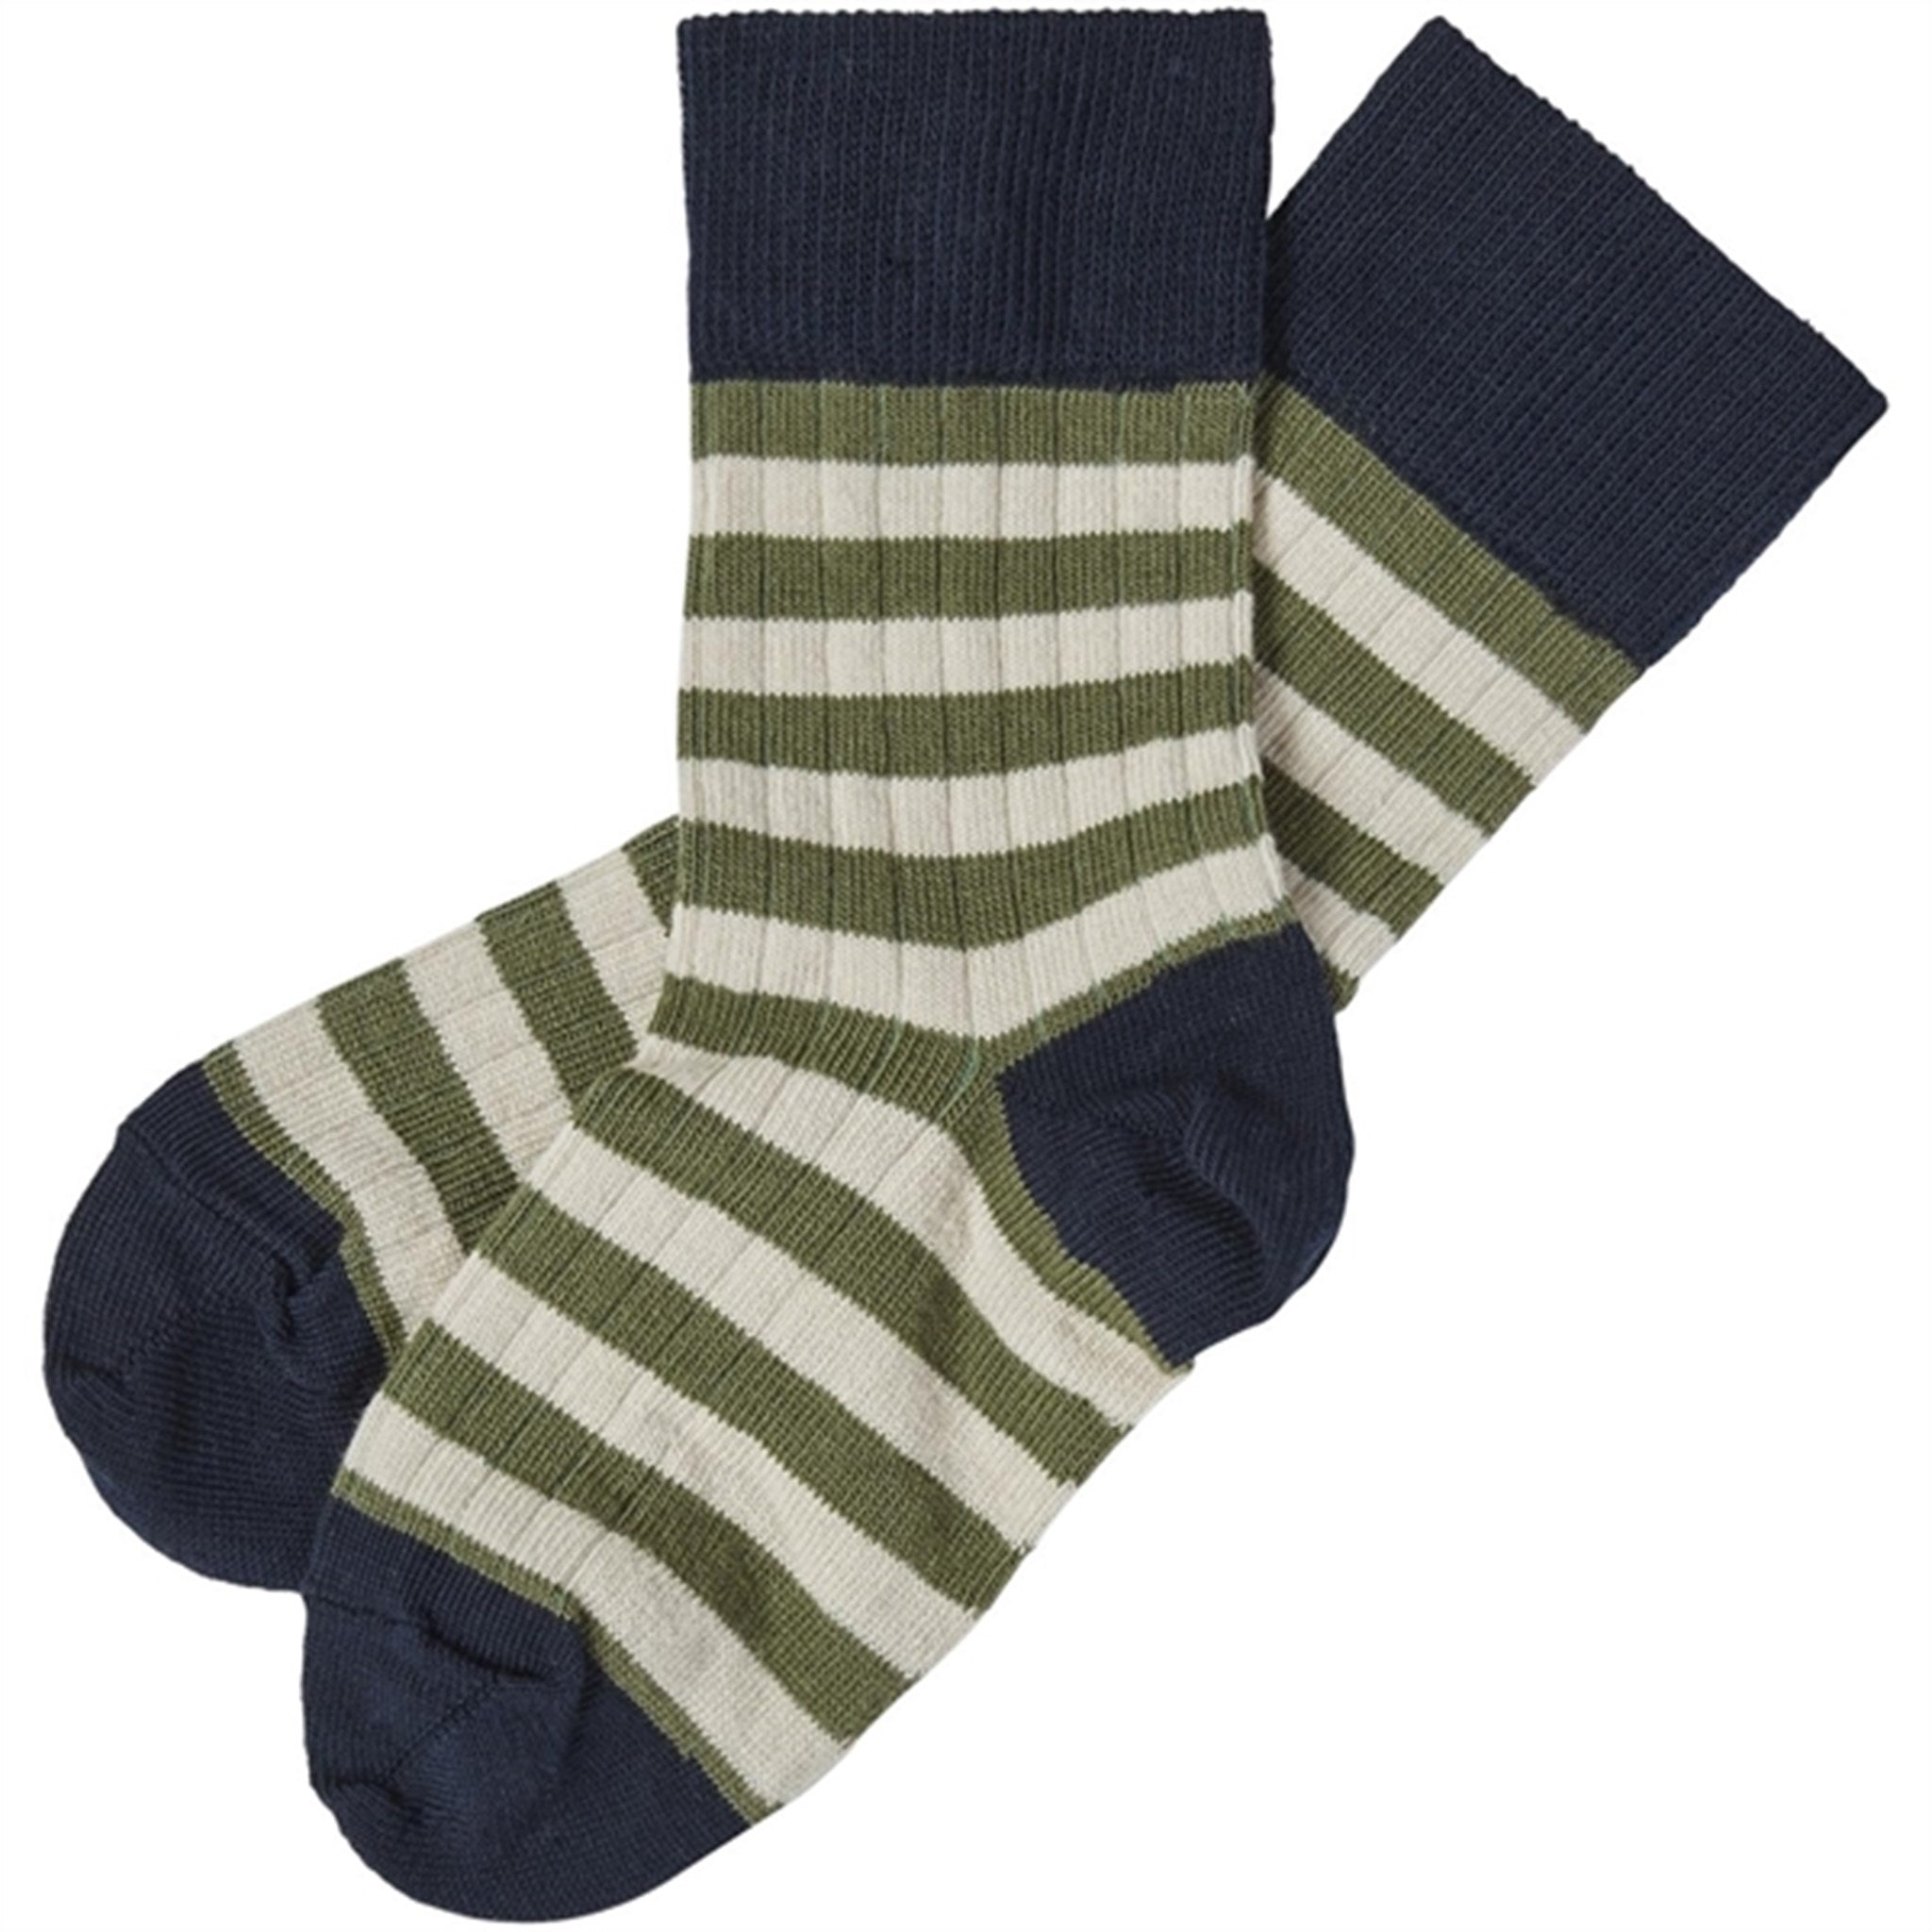 FUB Dark Navy/Olive 2-pack Classic Striped Socks 2